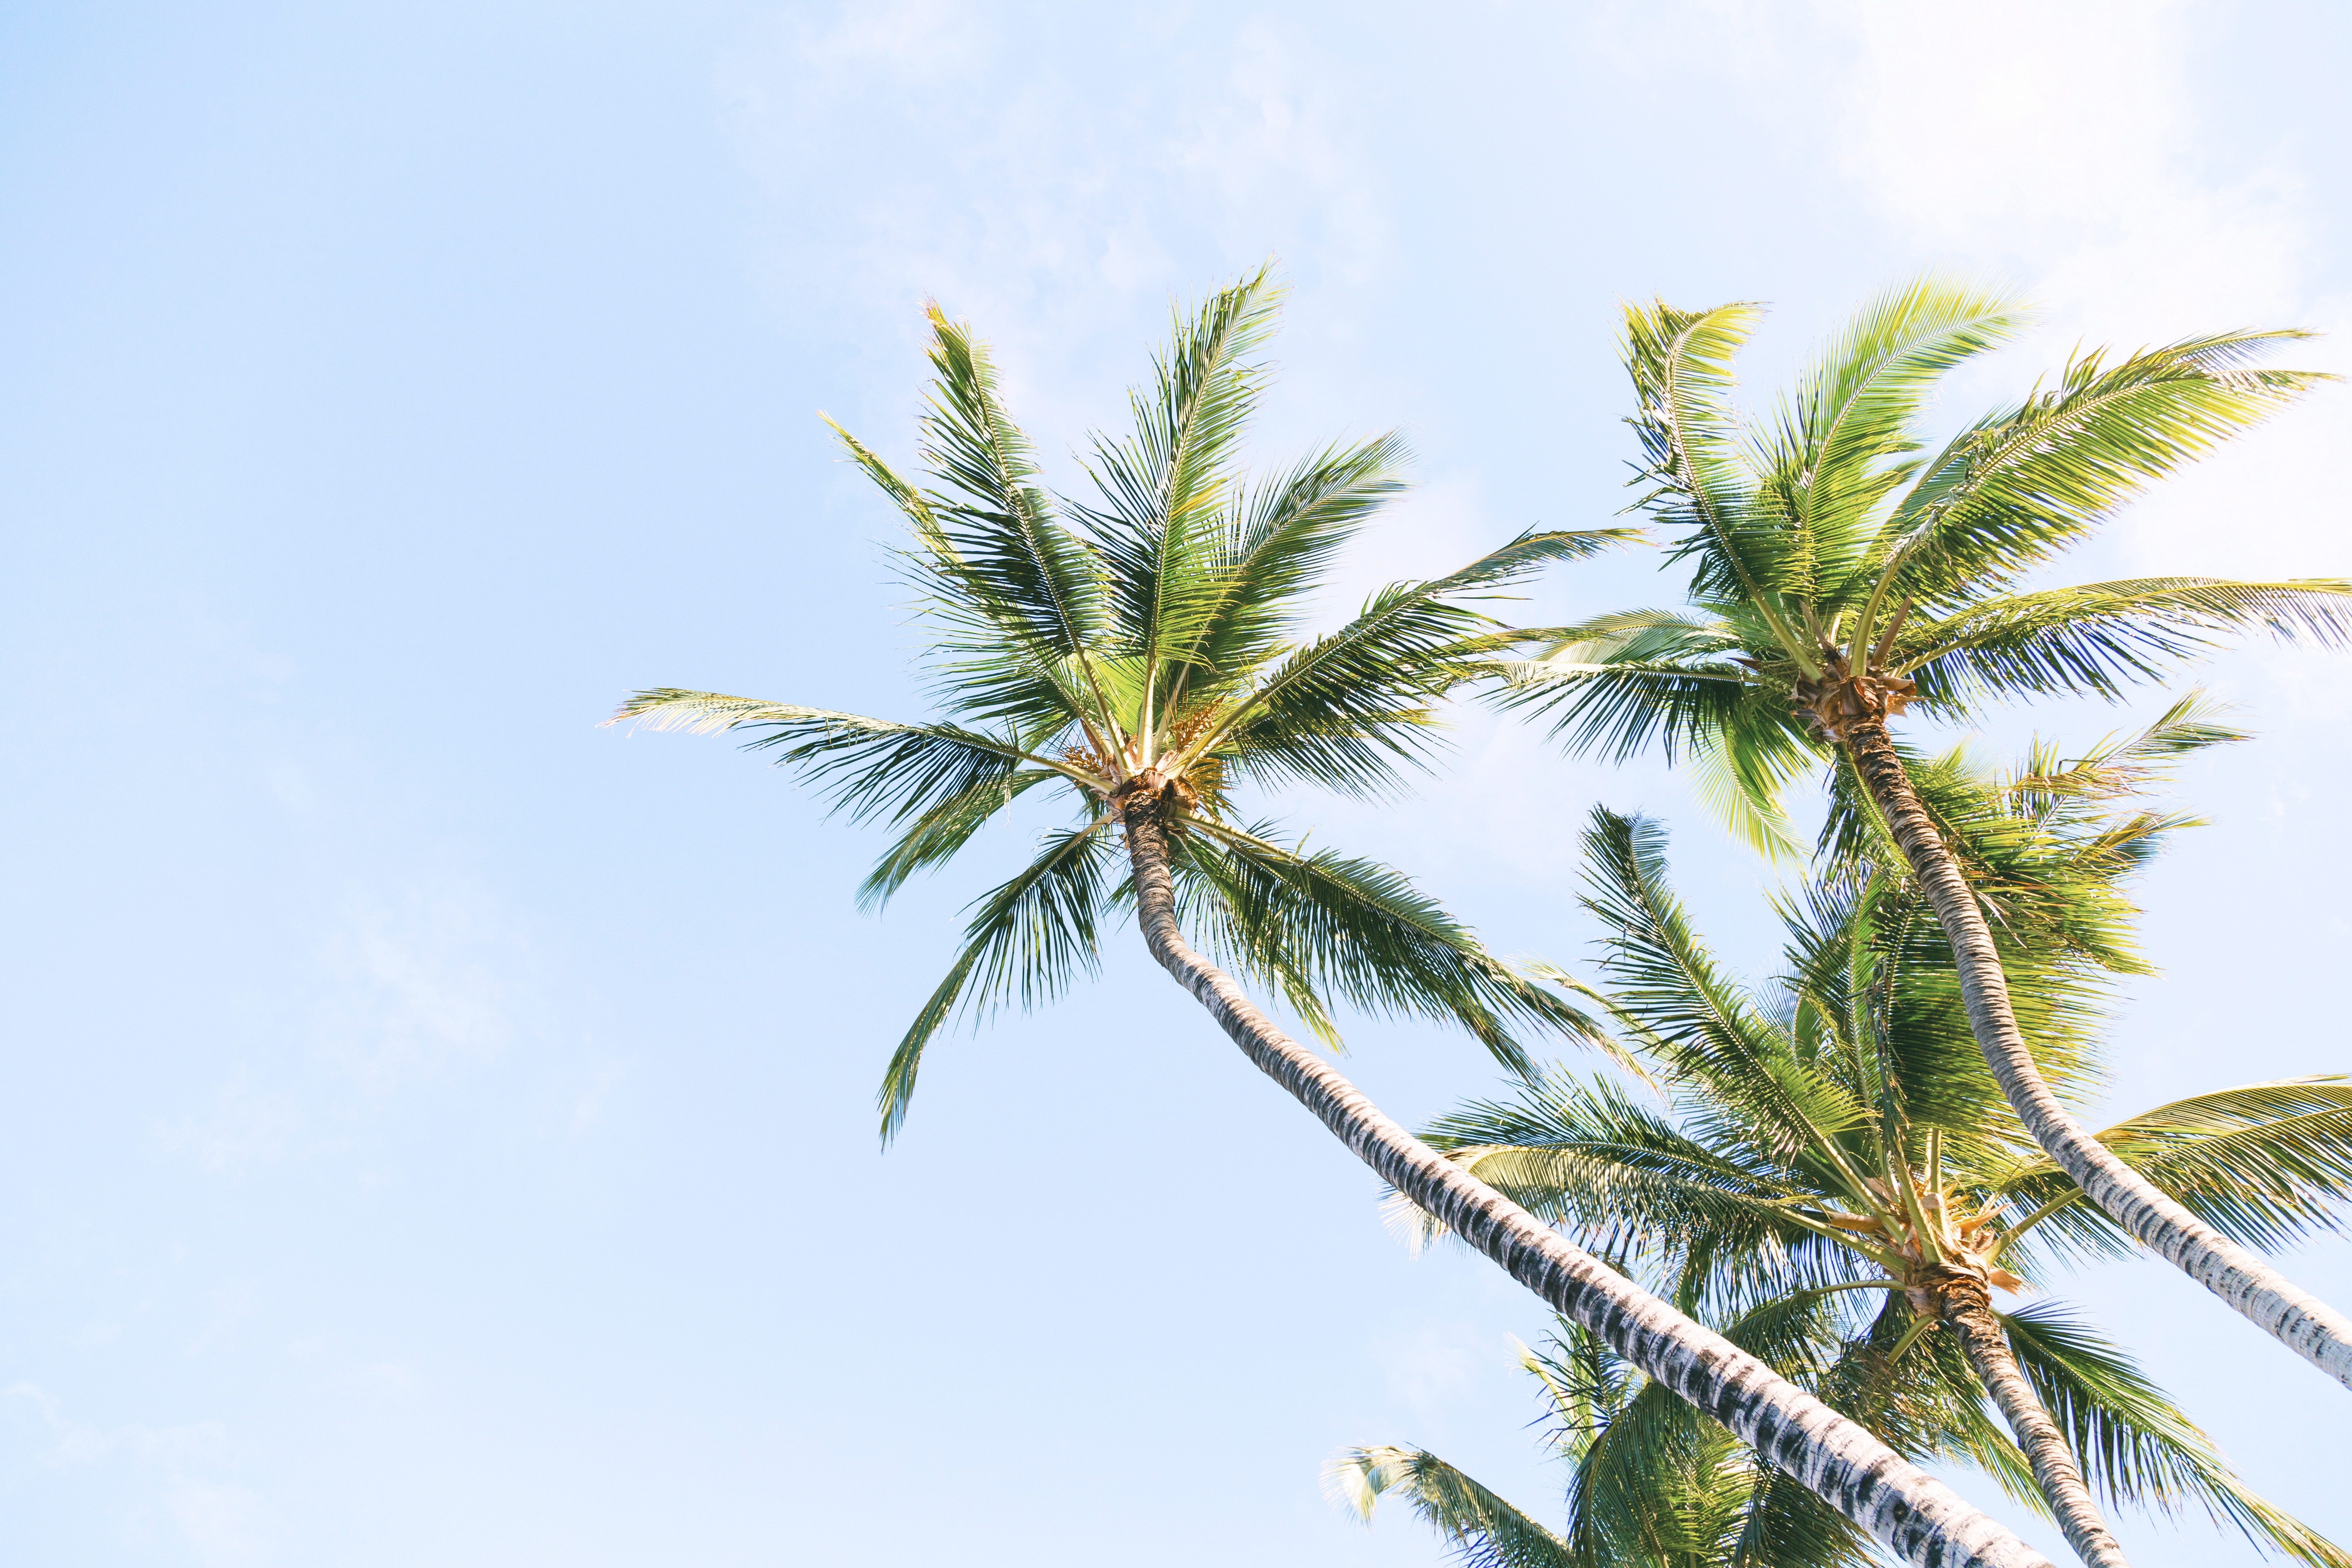 Palm trees against blue skies